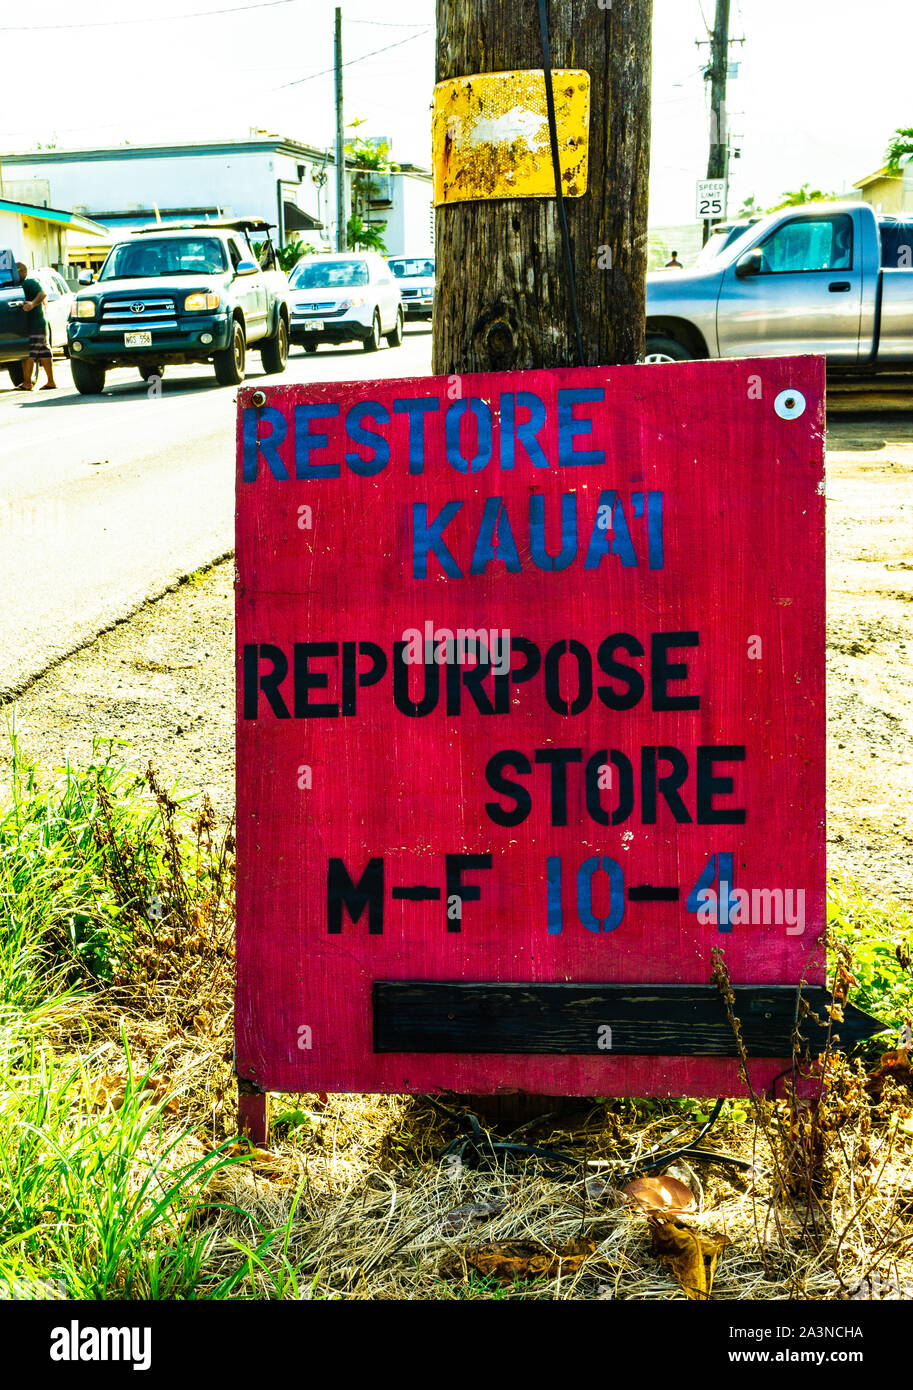 anker slot Anstændig Repurpose store, Kappa, Kauai, Hawaii, USA Stock Photo - Alamy